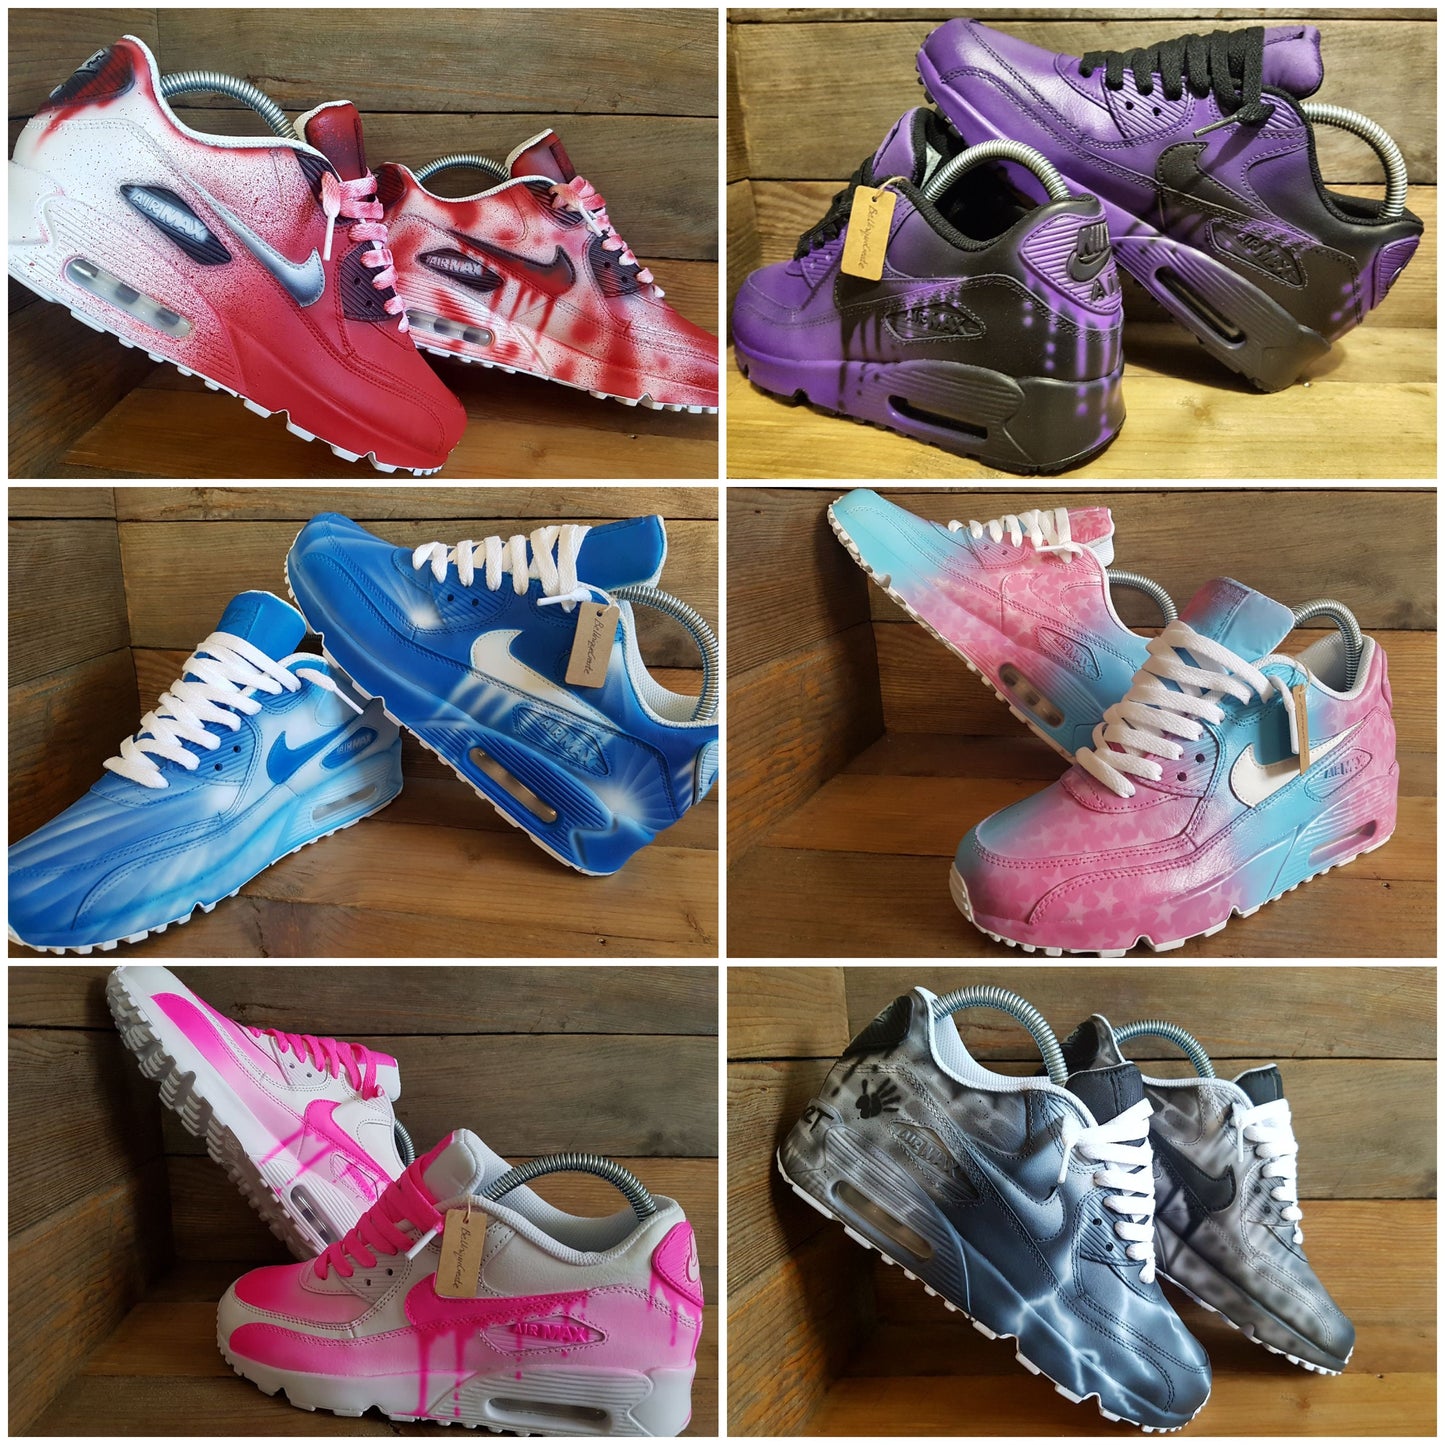 Custom Painted Air Max 90/Sneakers/Shoes/Kicks/Art/The Rusty One